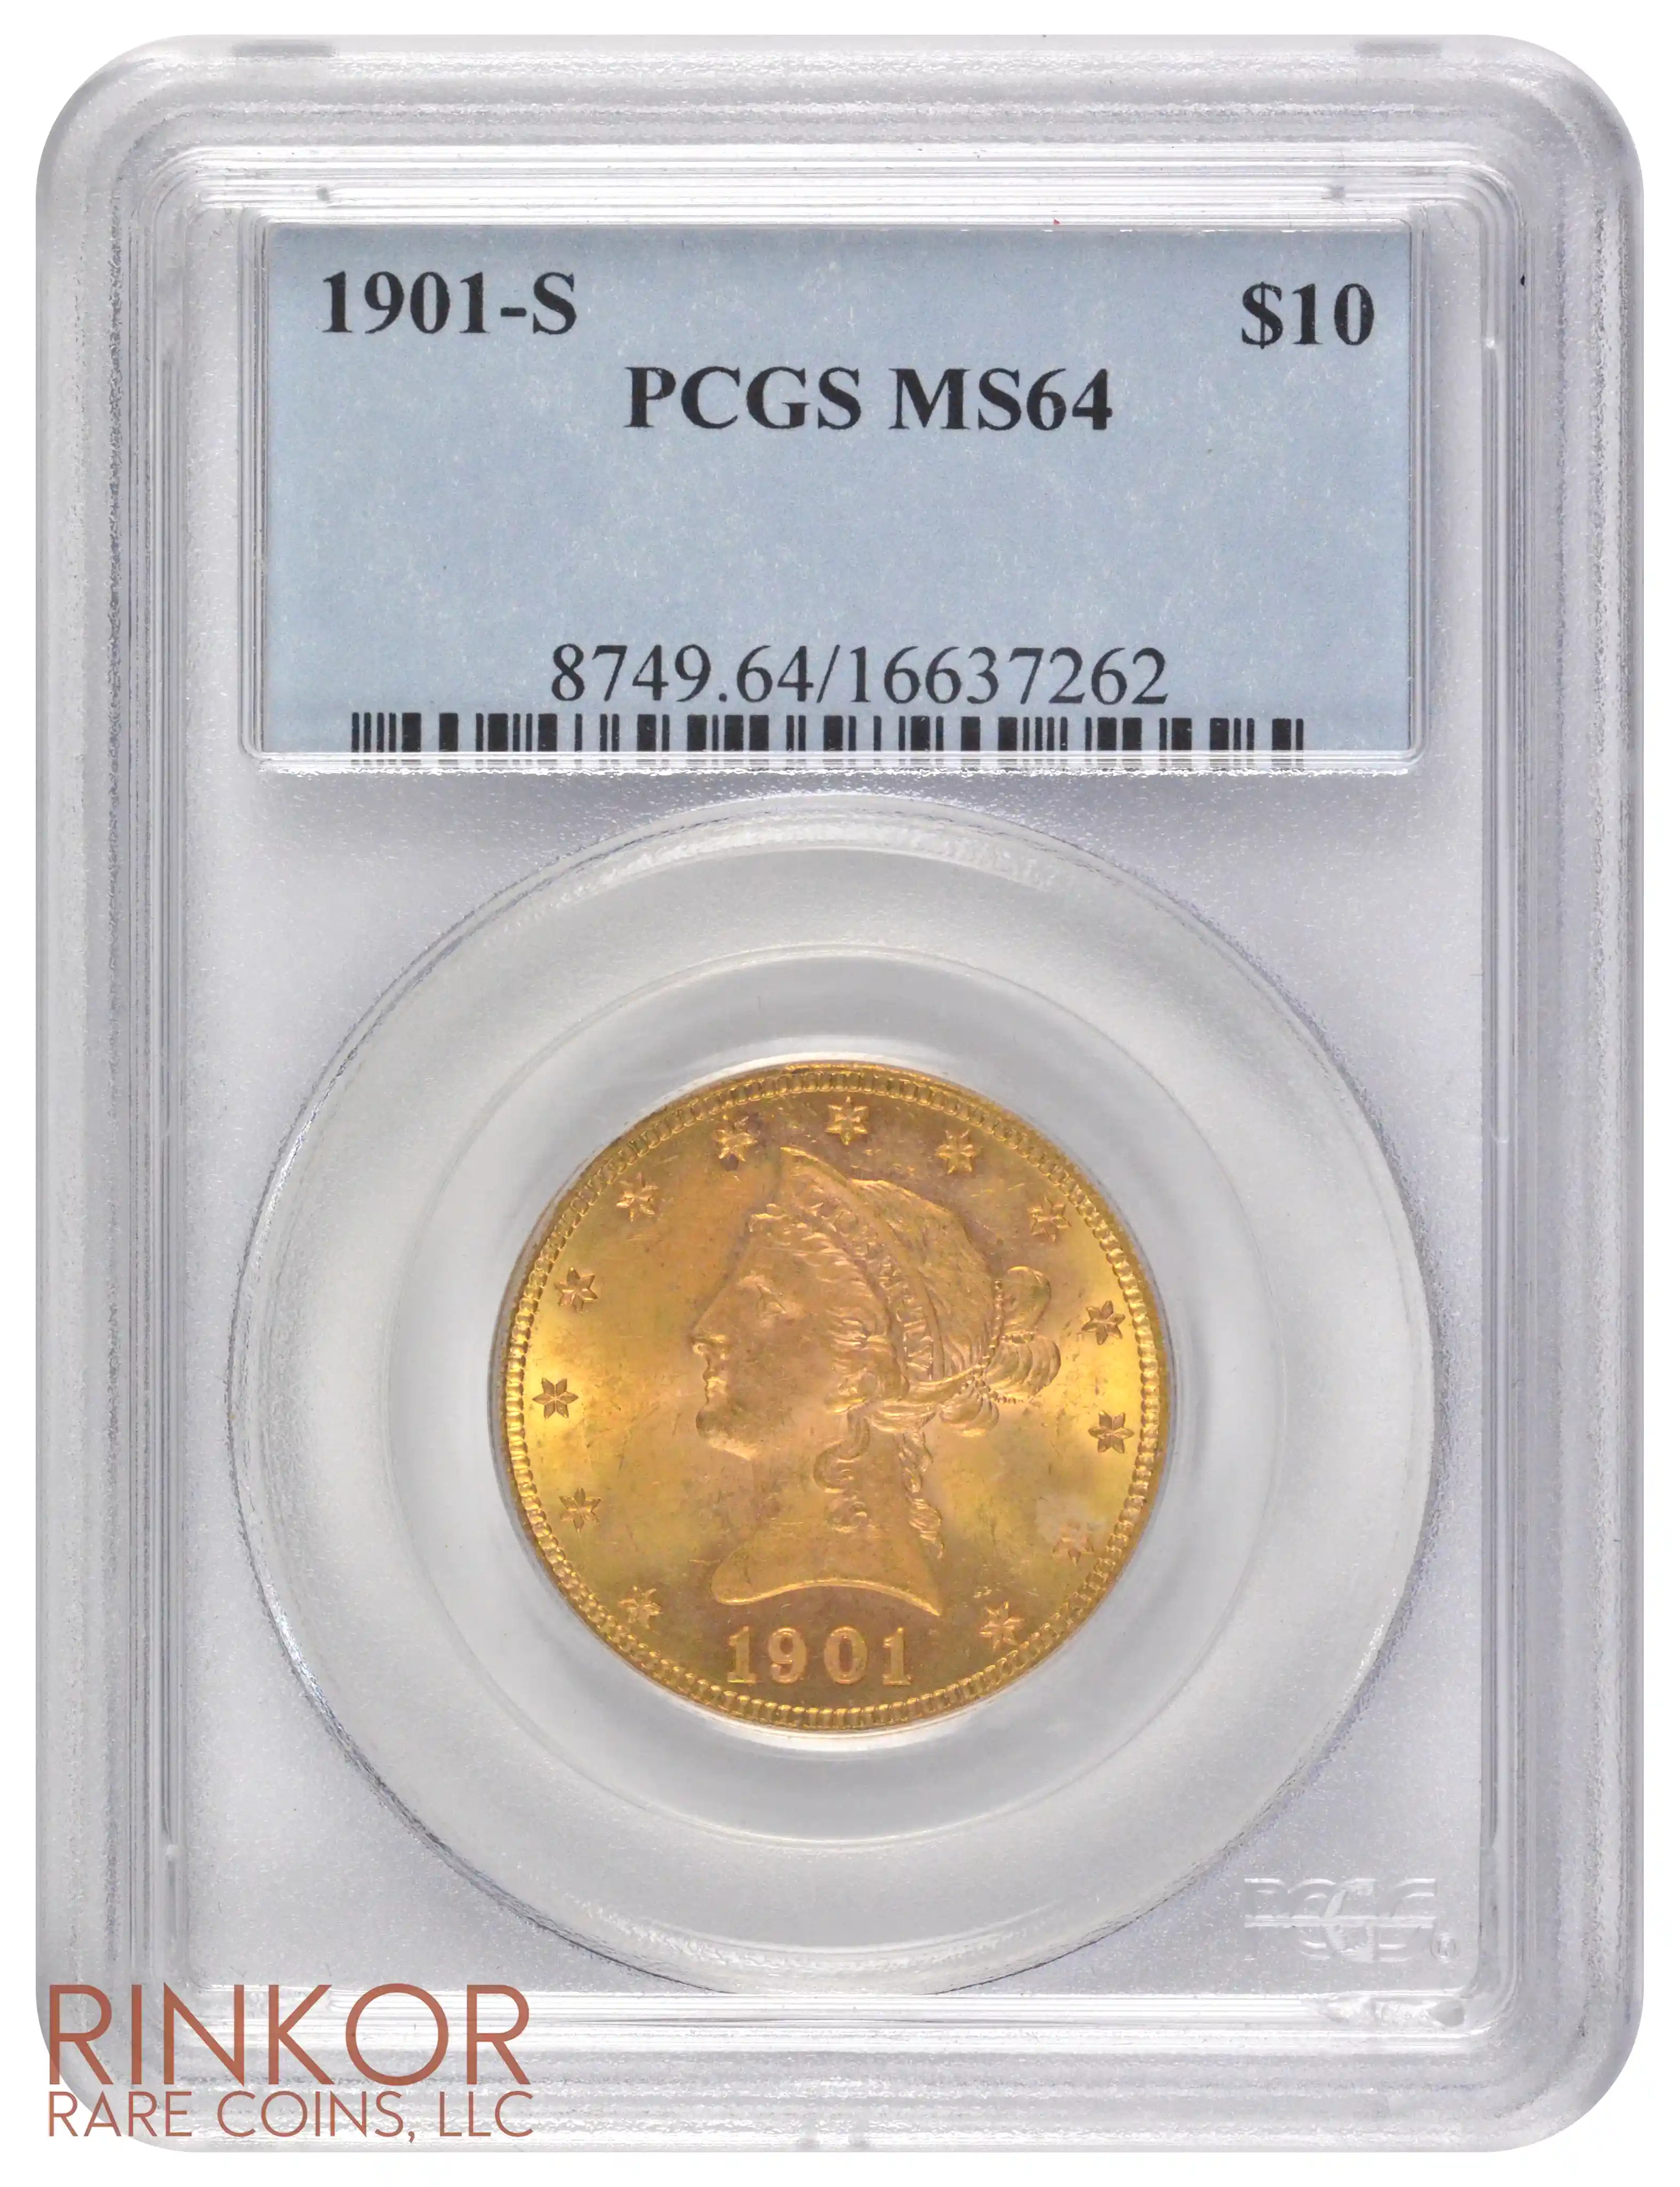 1901-S $10 Liberty Head PCGS MS 64